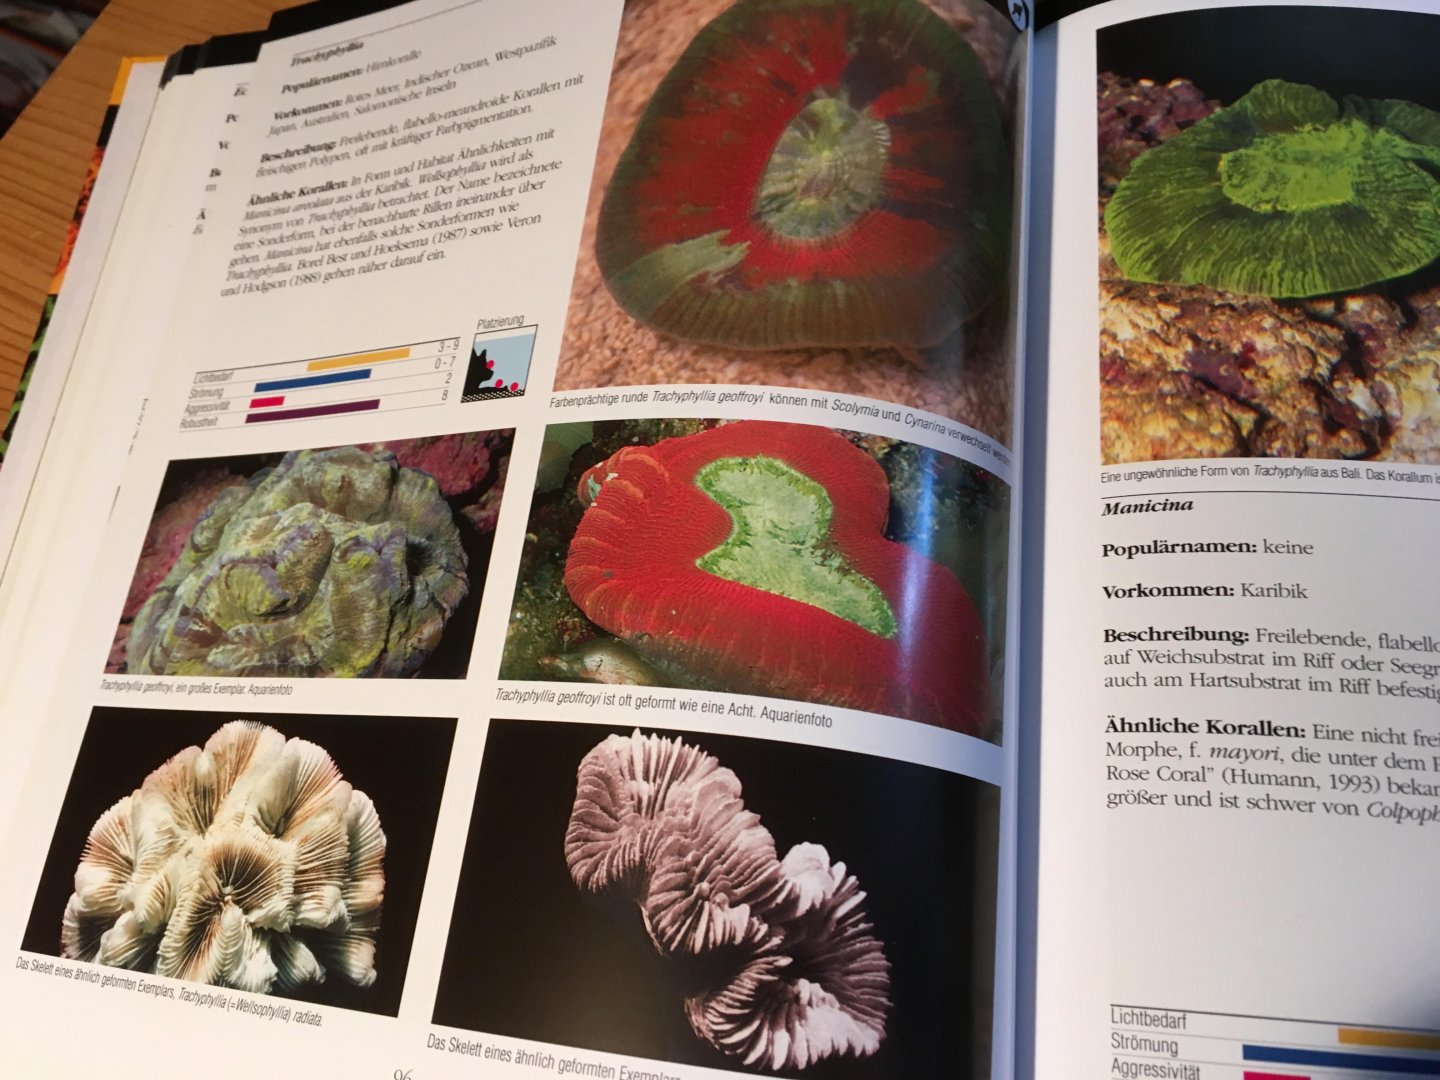 Sprung, Julian - Korallen - Ein Bestimmungsbuch (Gids voor het koraal)